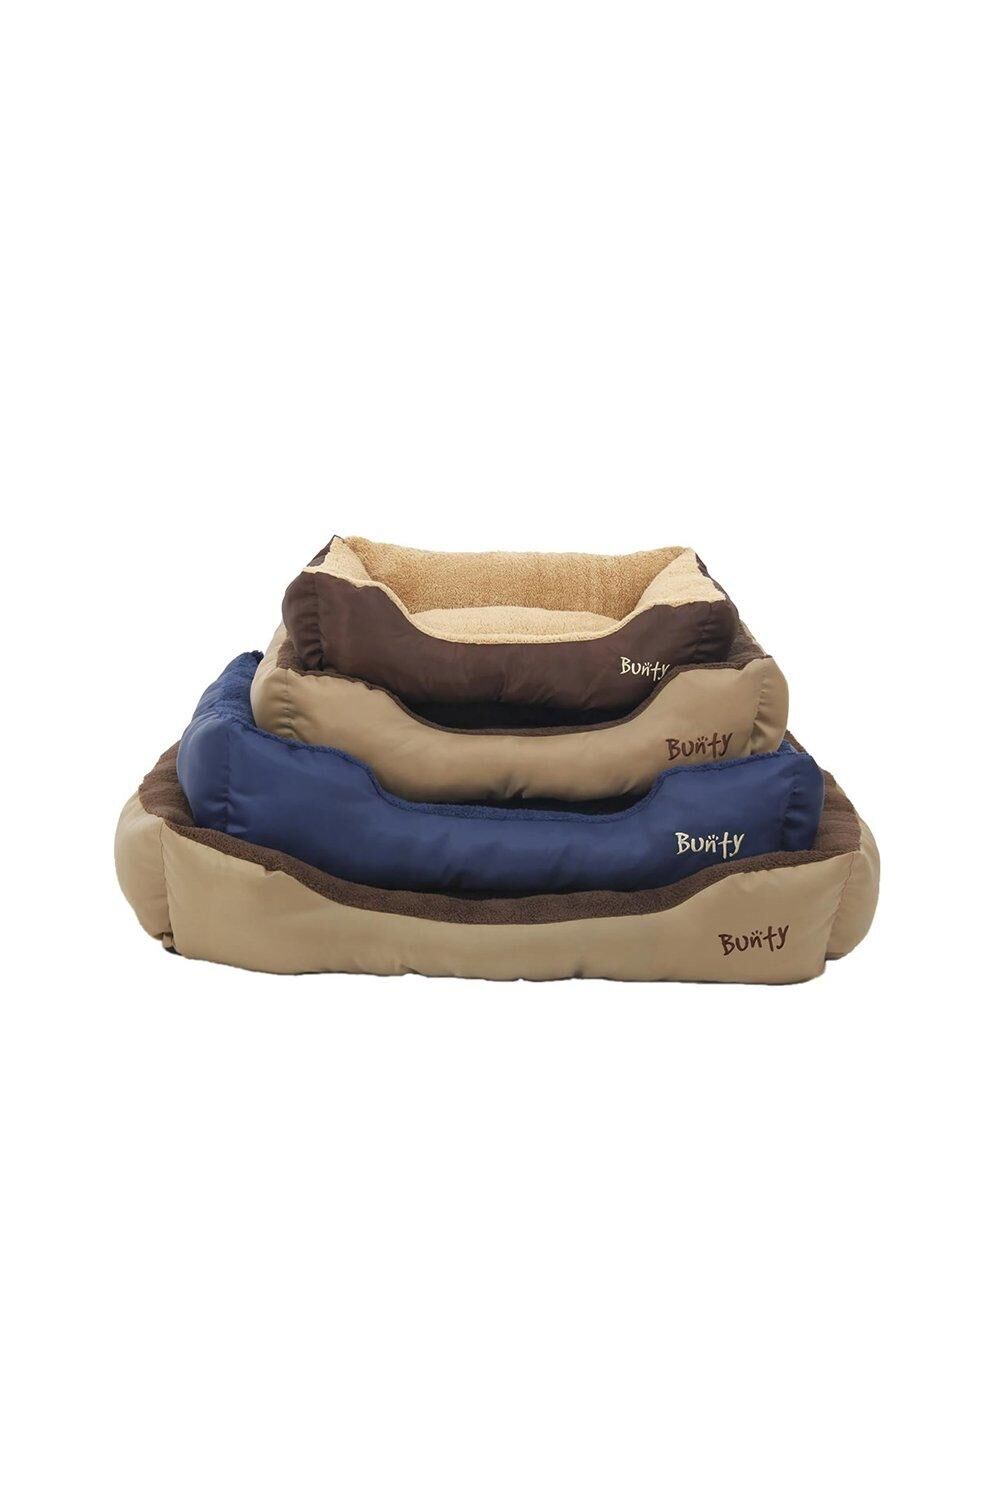 Bunty Deluxe Soft Washable Dog Pet Warm Basket Bed Cushion with Fleece Lining